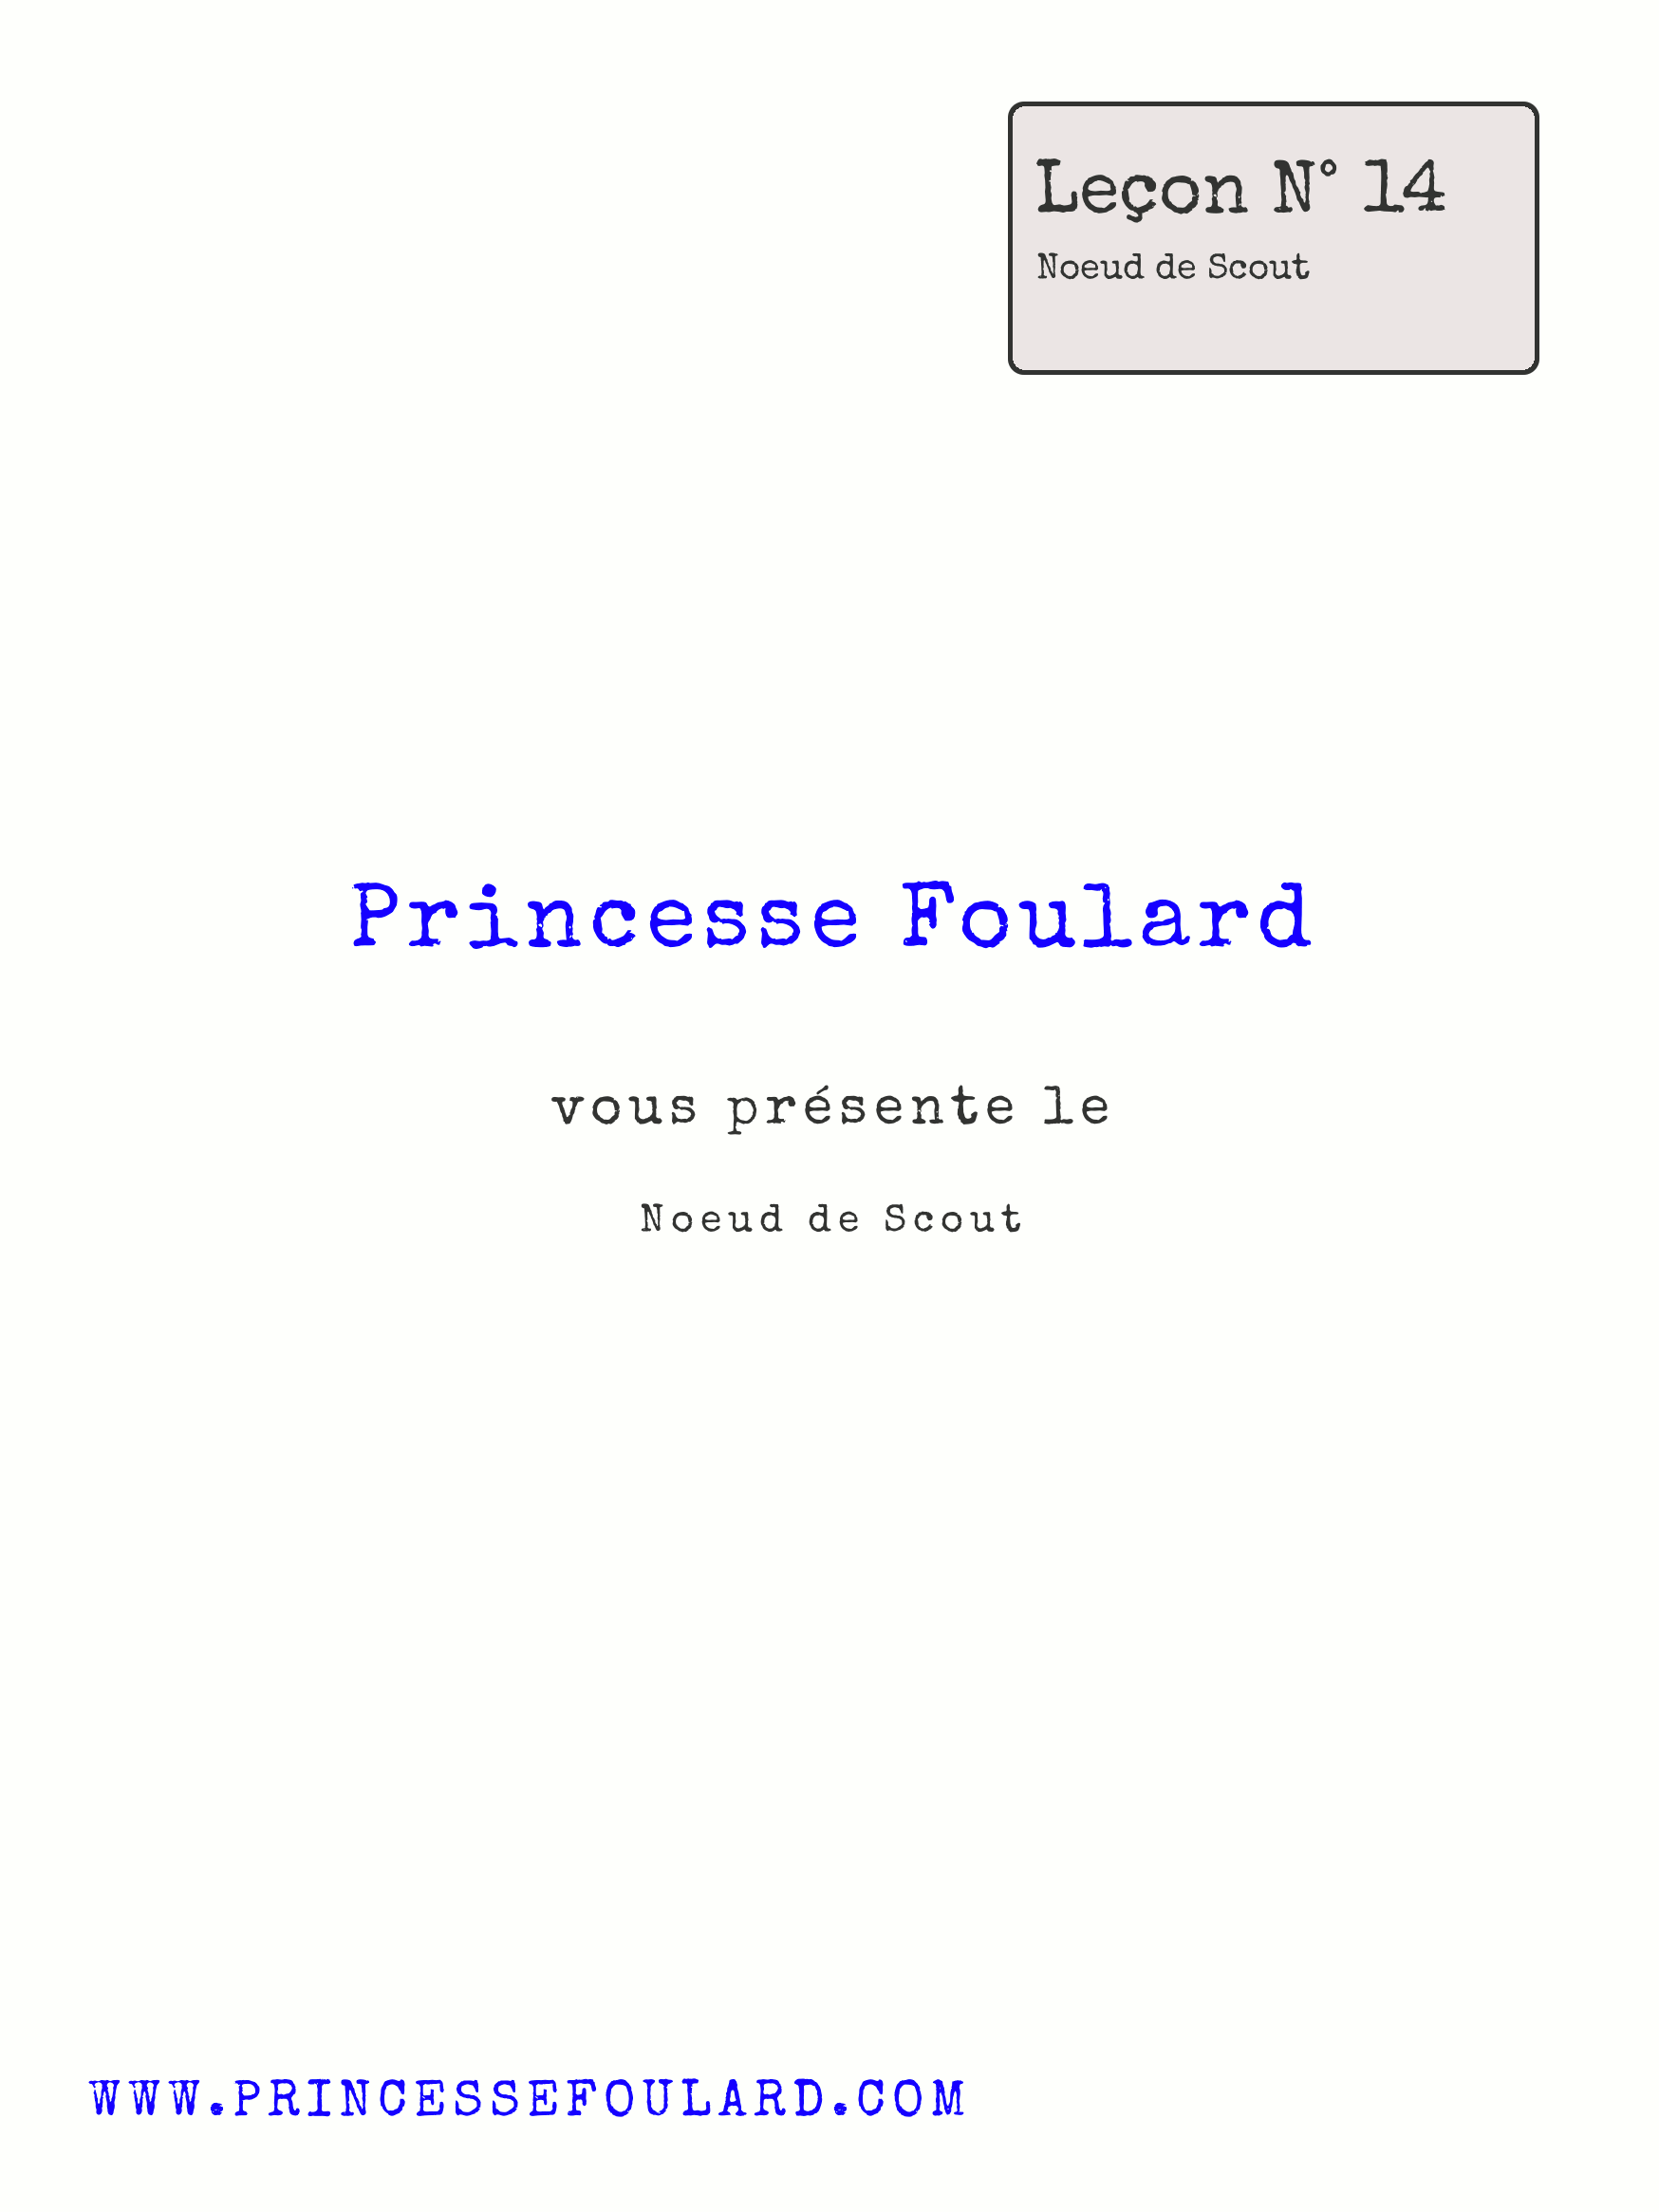 Tuto Noeud de Foulard de scoot par "Princesse Foulard"